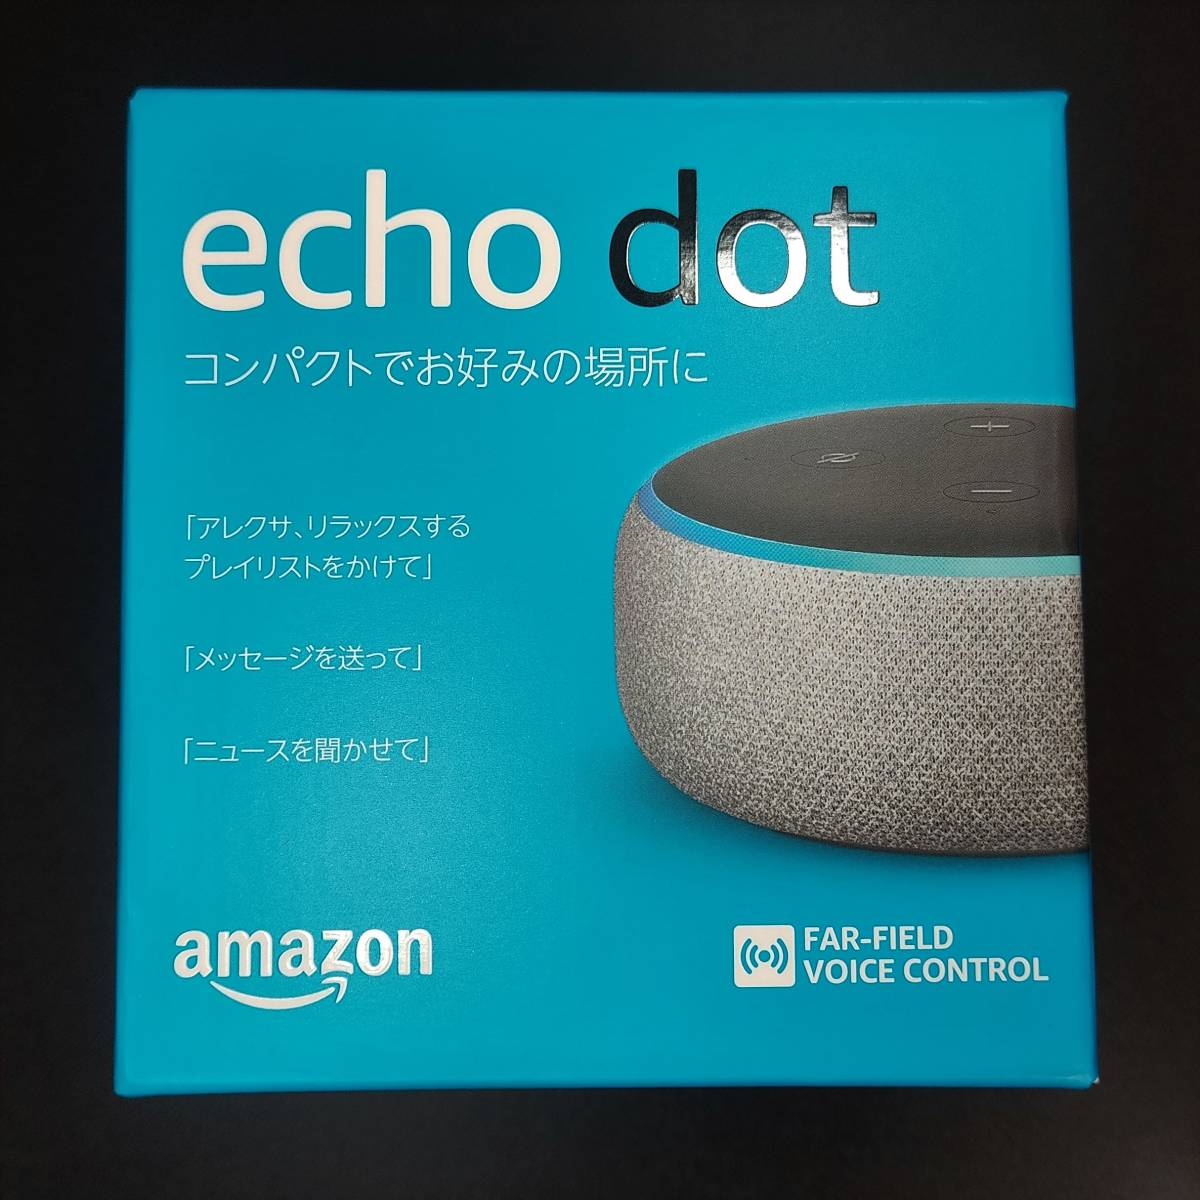 Echo Dot no. 3 generation Heather gray / Amazon eko - dot 